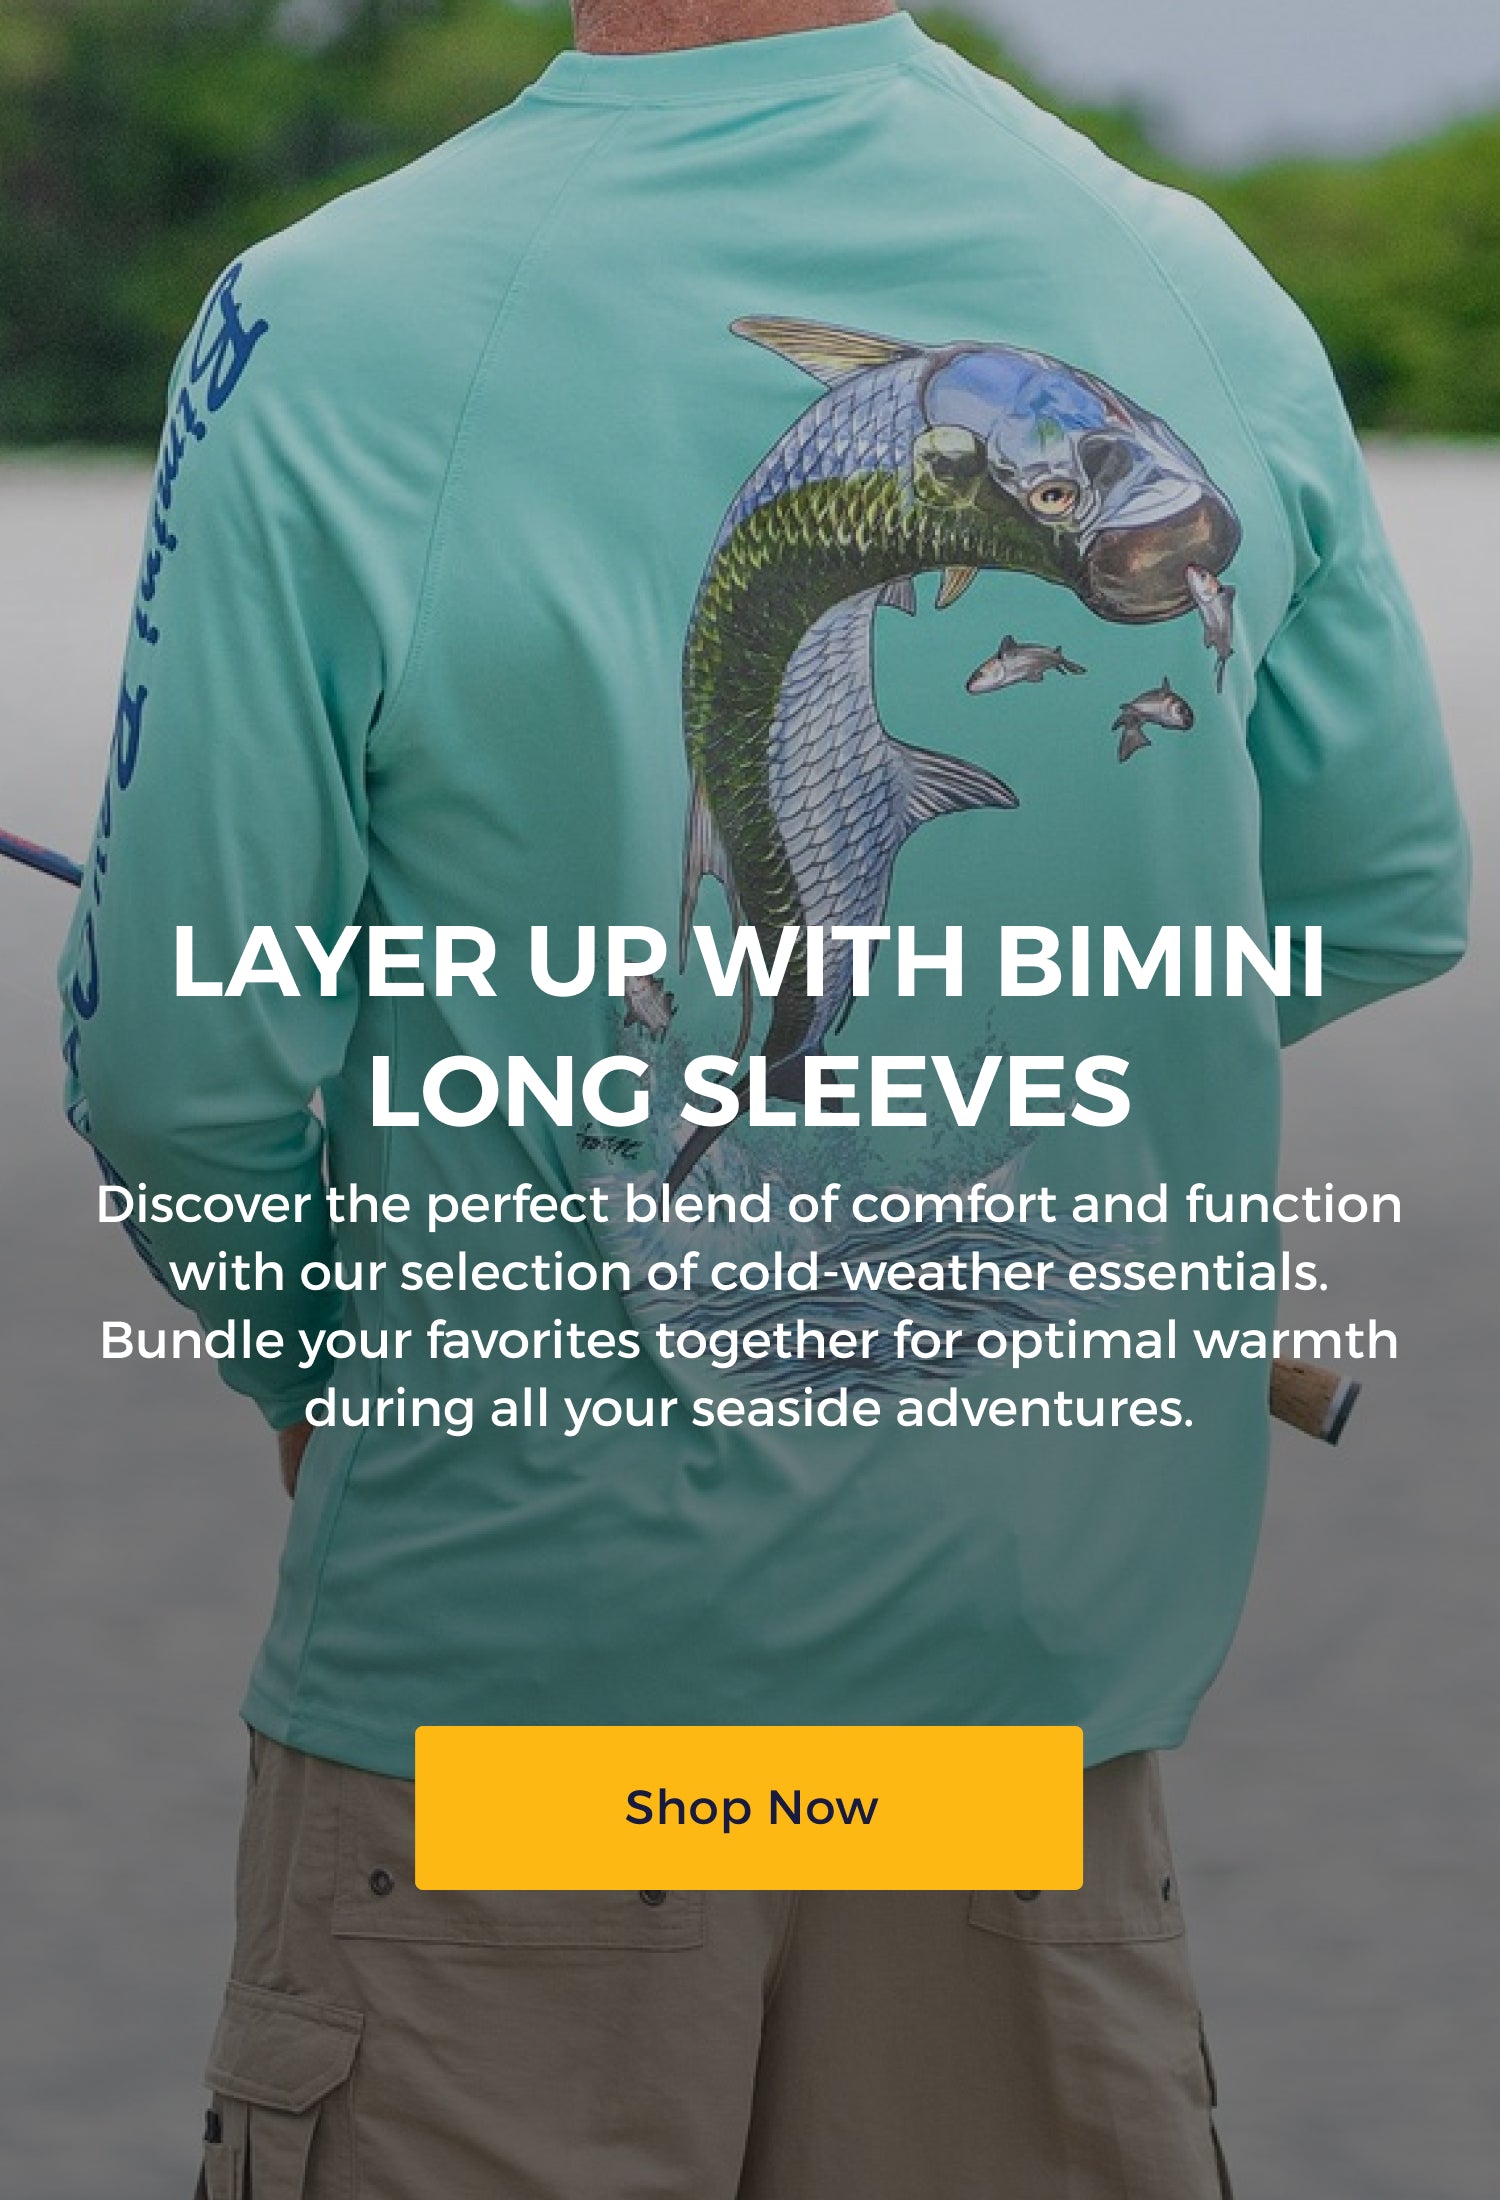 Bimini Bay Outfitters